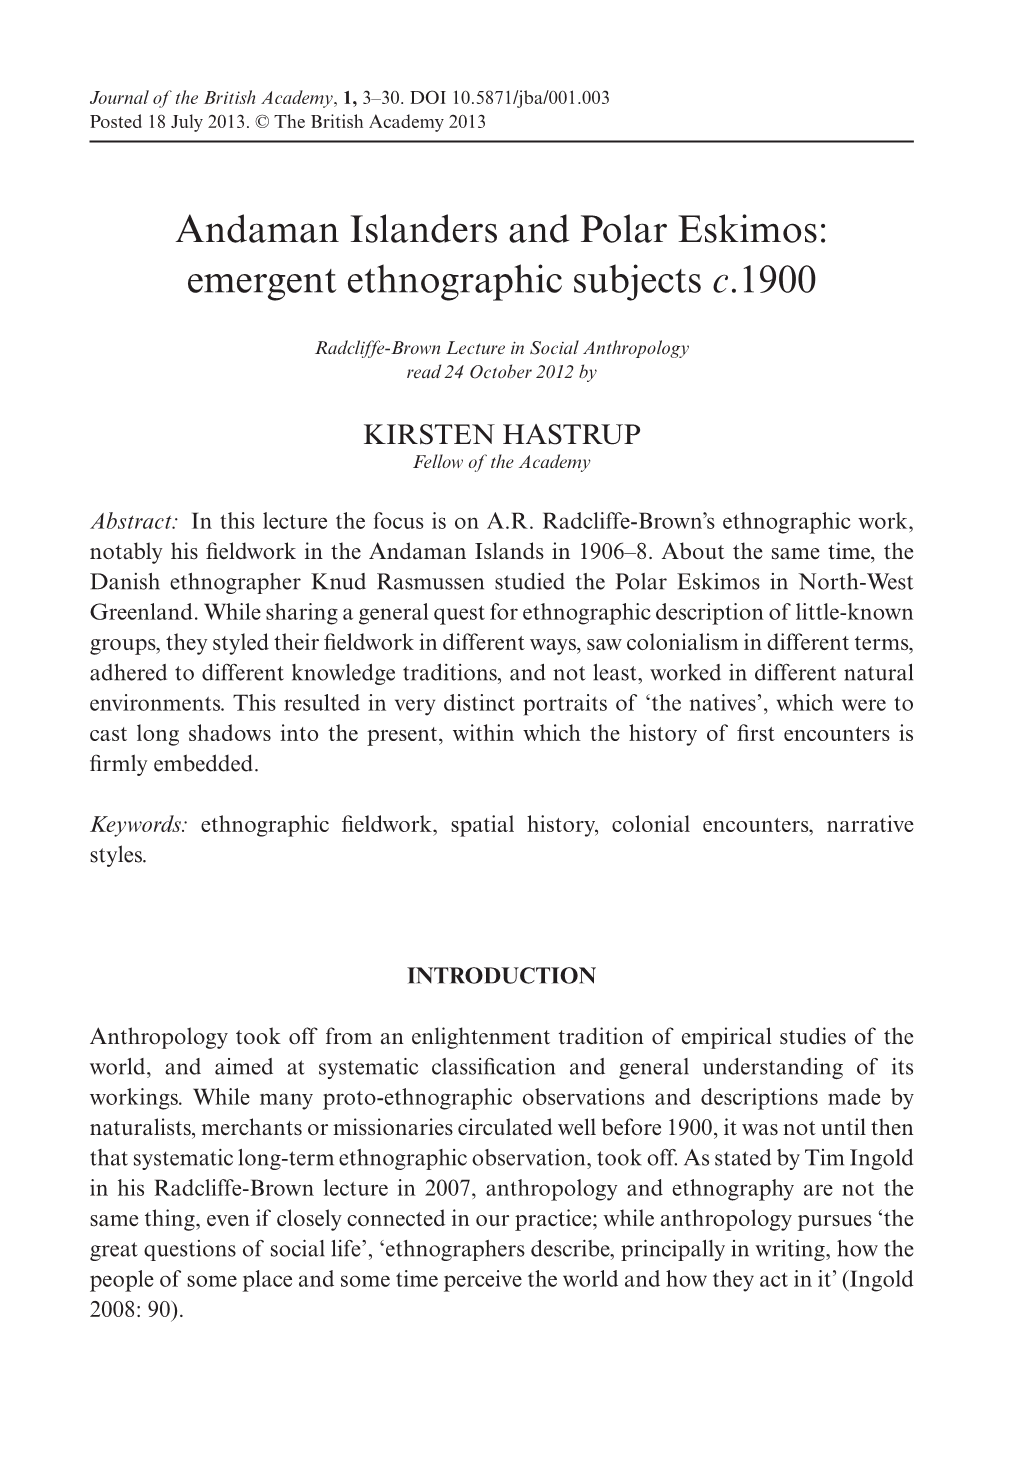 Andaman Islanders and Polar Eskimos: Emergent Ethnographic Subjects C.1900